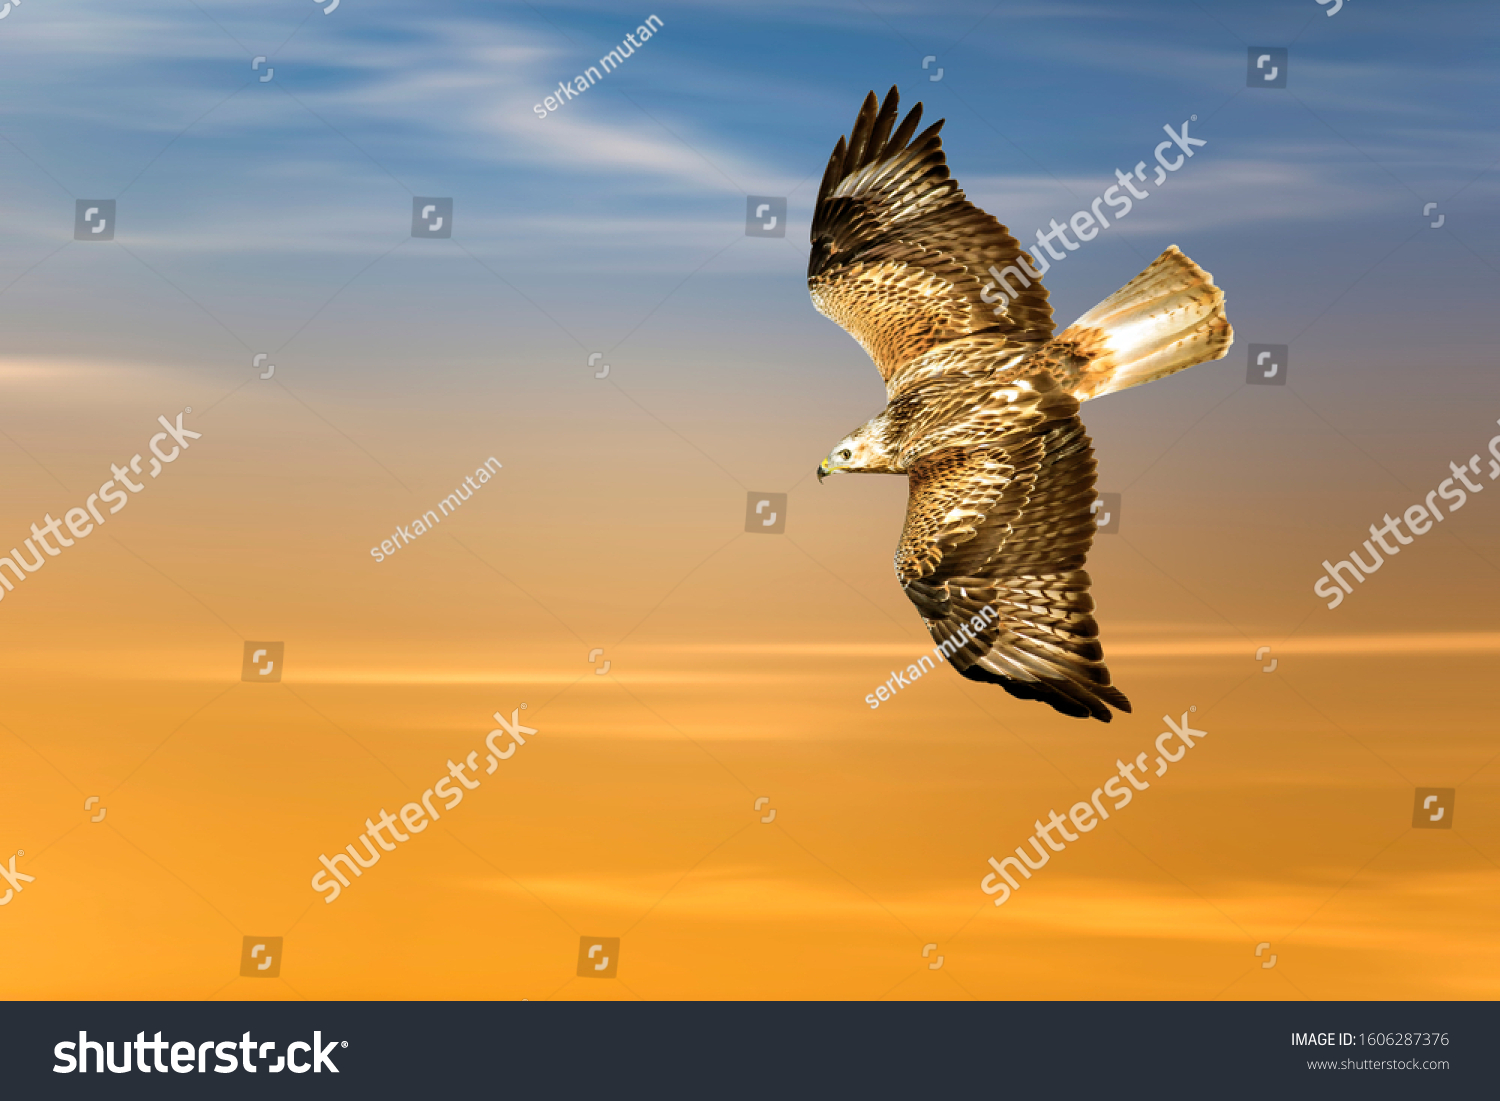 Flying bird. Bird of prey. Colorful sky background.  #1606287376